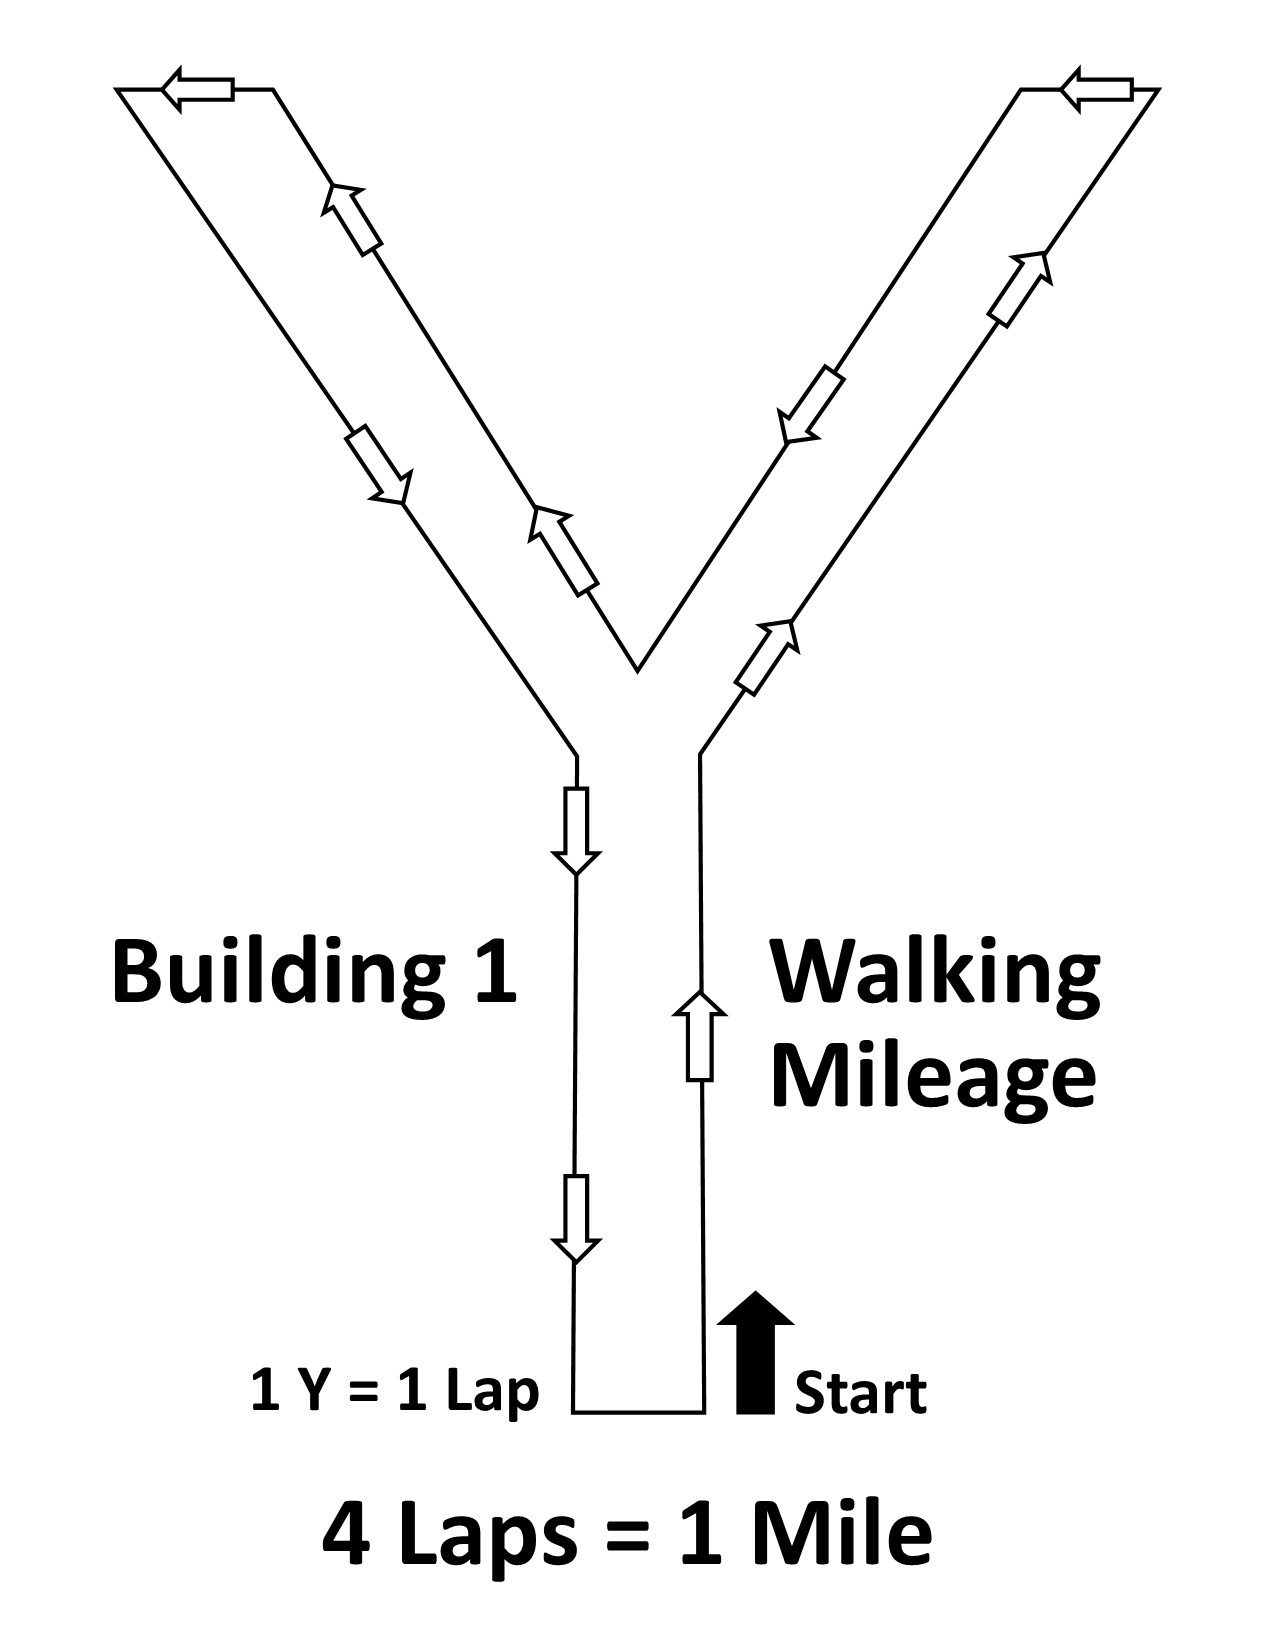 Building 1 Walking Mileage